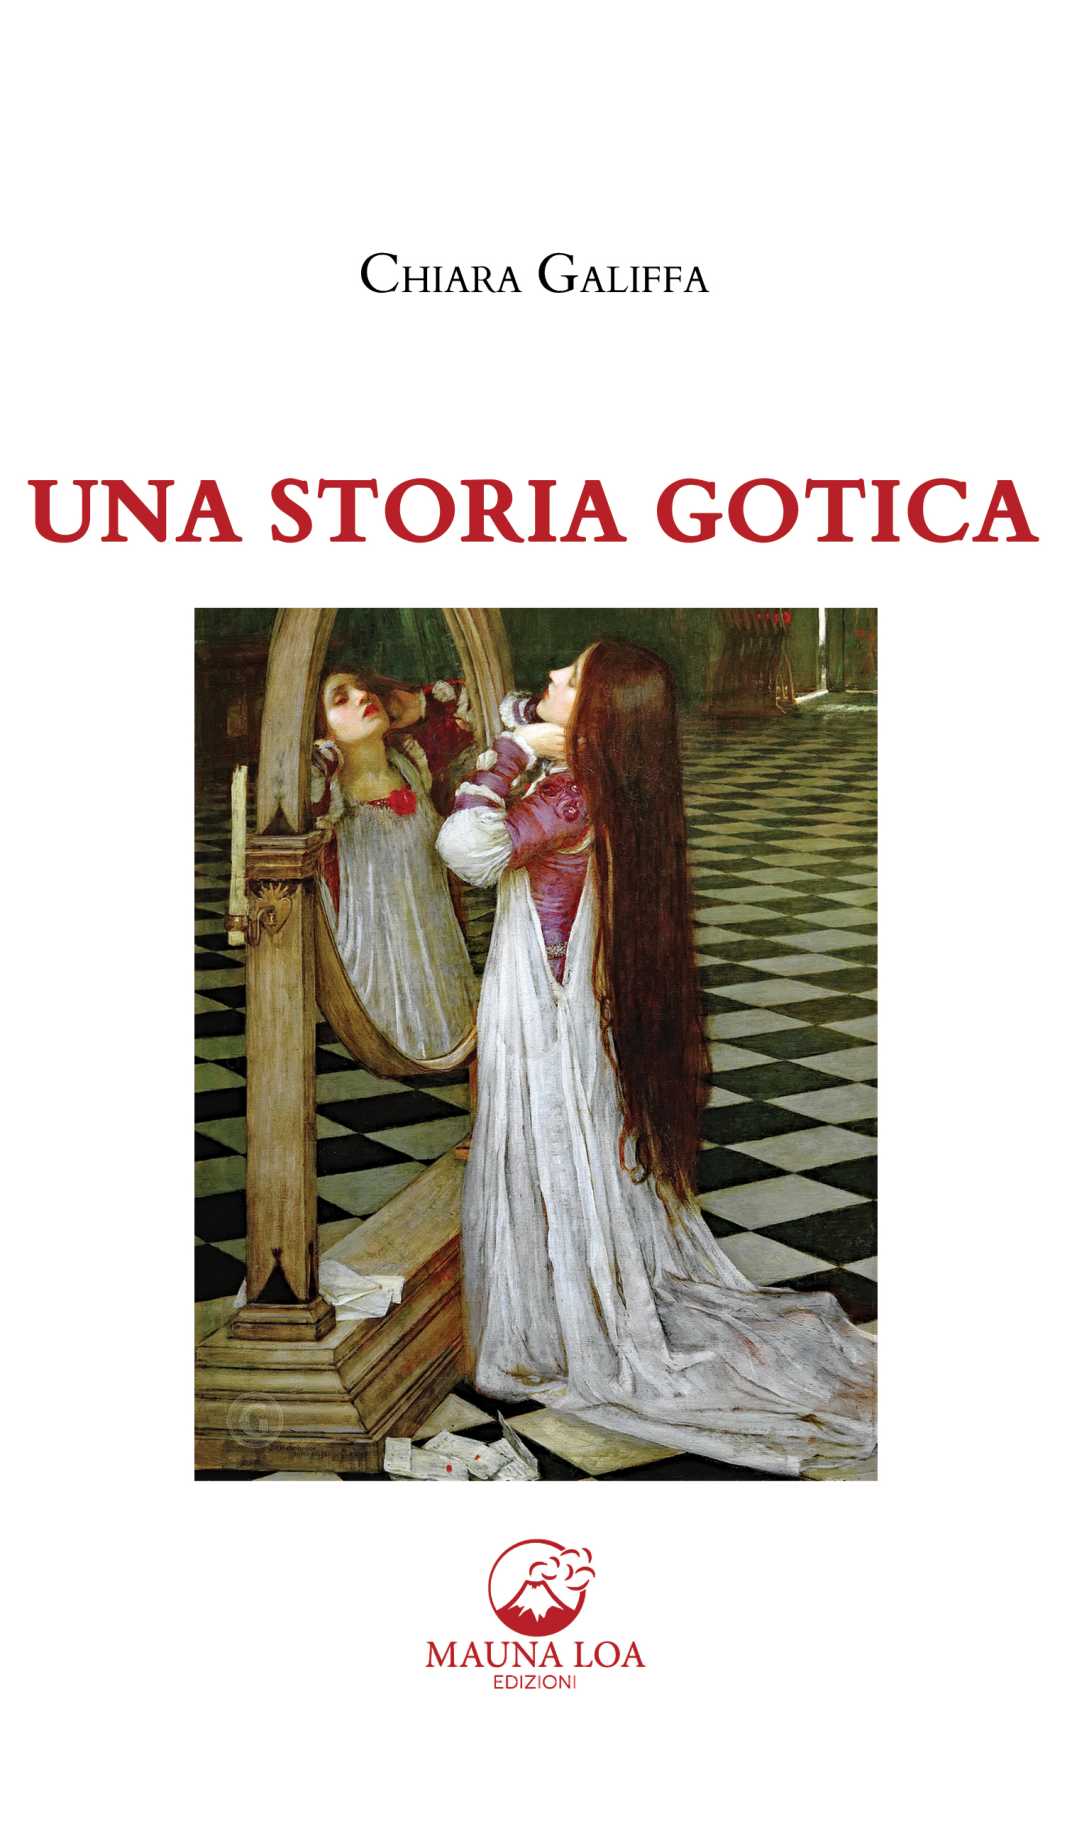 Chiara Galiffa, “Una Storia Gotica”